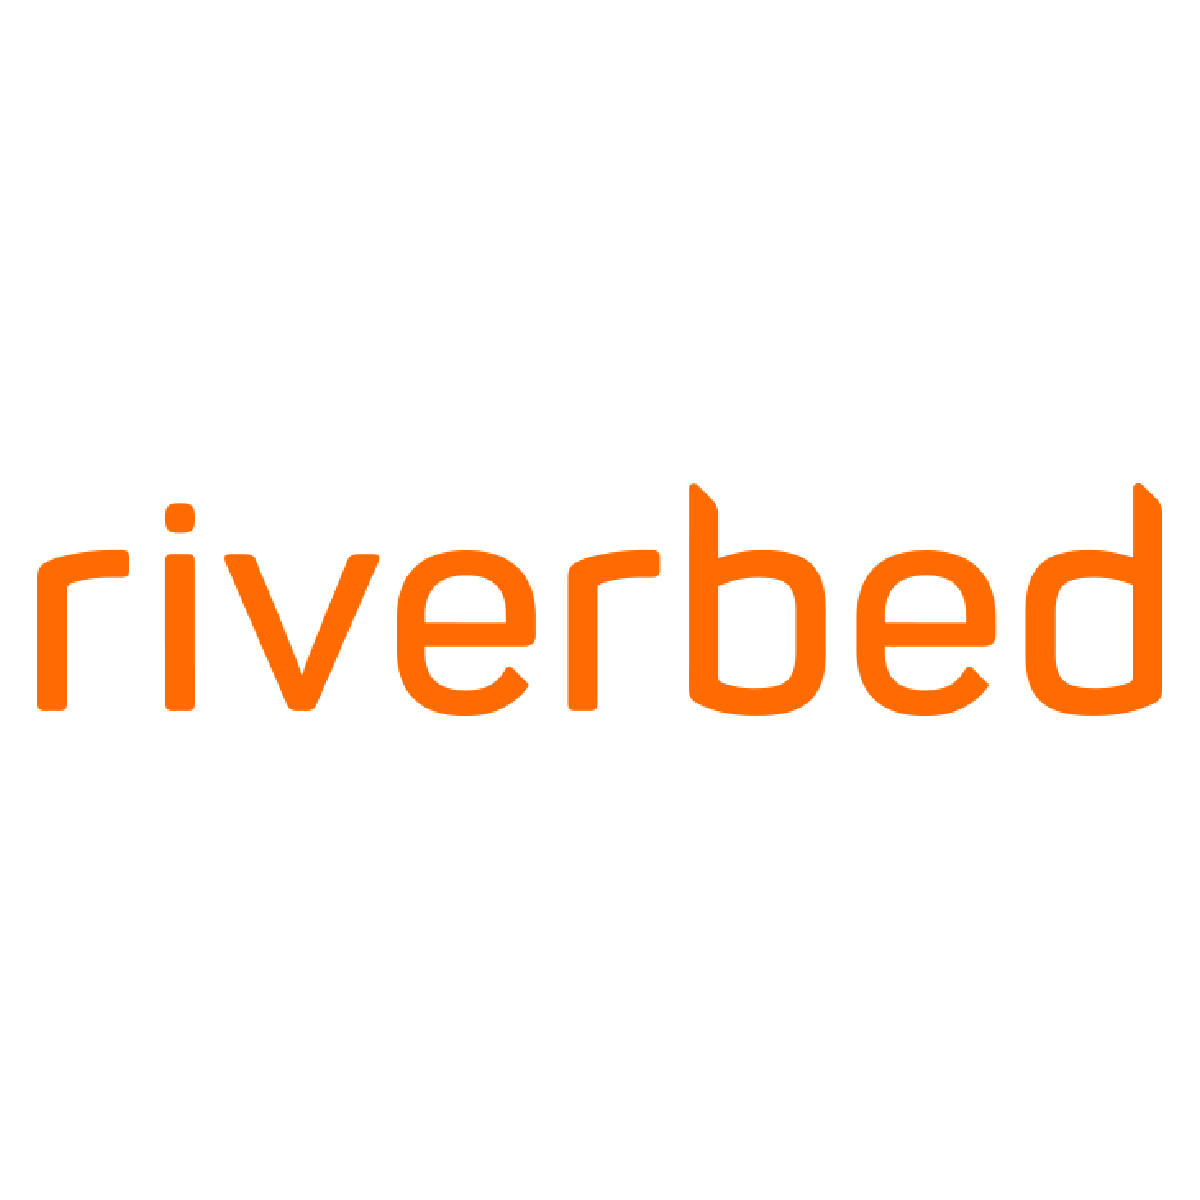 Riverbed Software Engineer - Network Analytics Intern - Fall 2021 1 Riverbed Software Engineer - Network Analytics Intern - Fall 2021